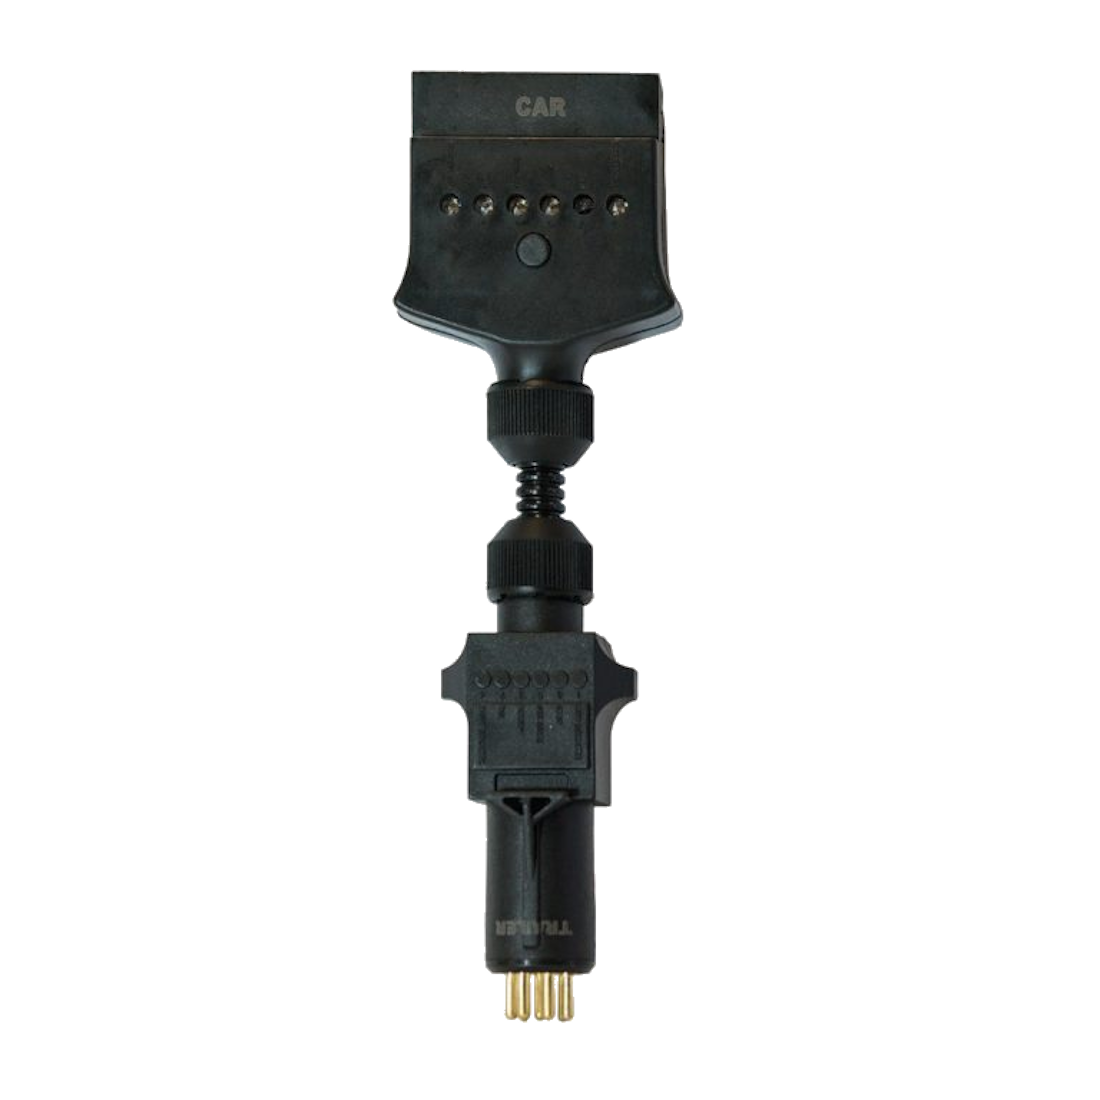 Adaptor 7 Pin, Flat Socket to 7 Pin Small Plug